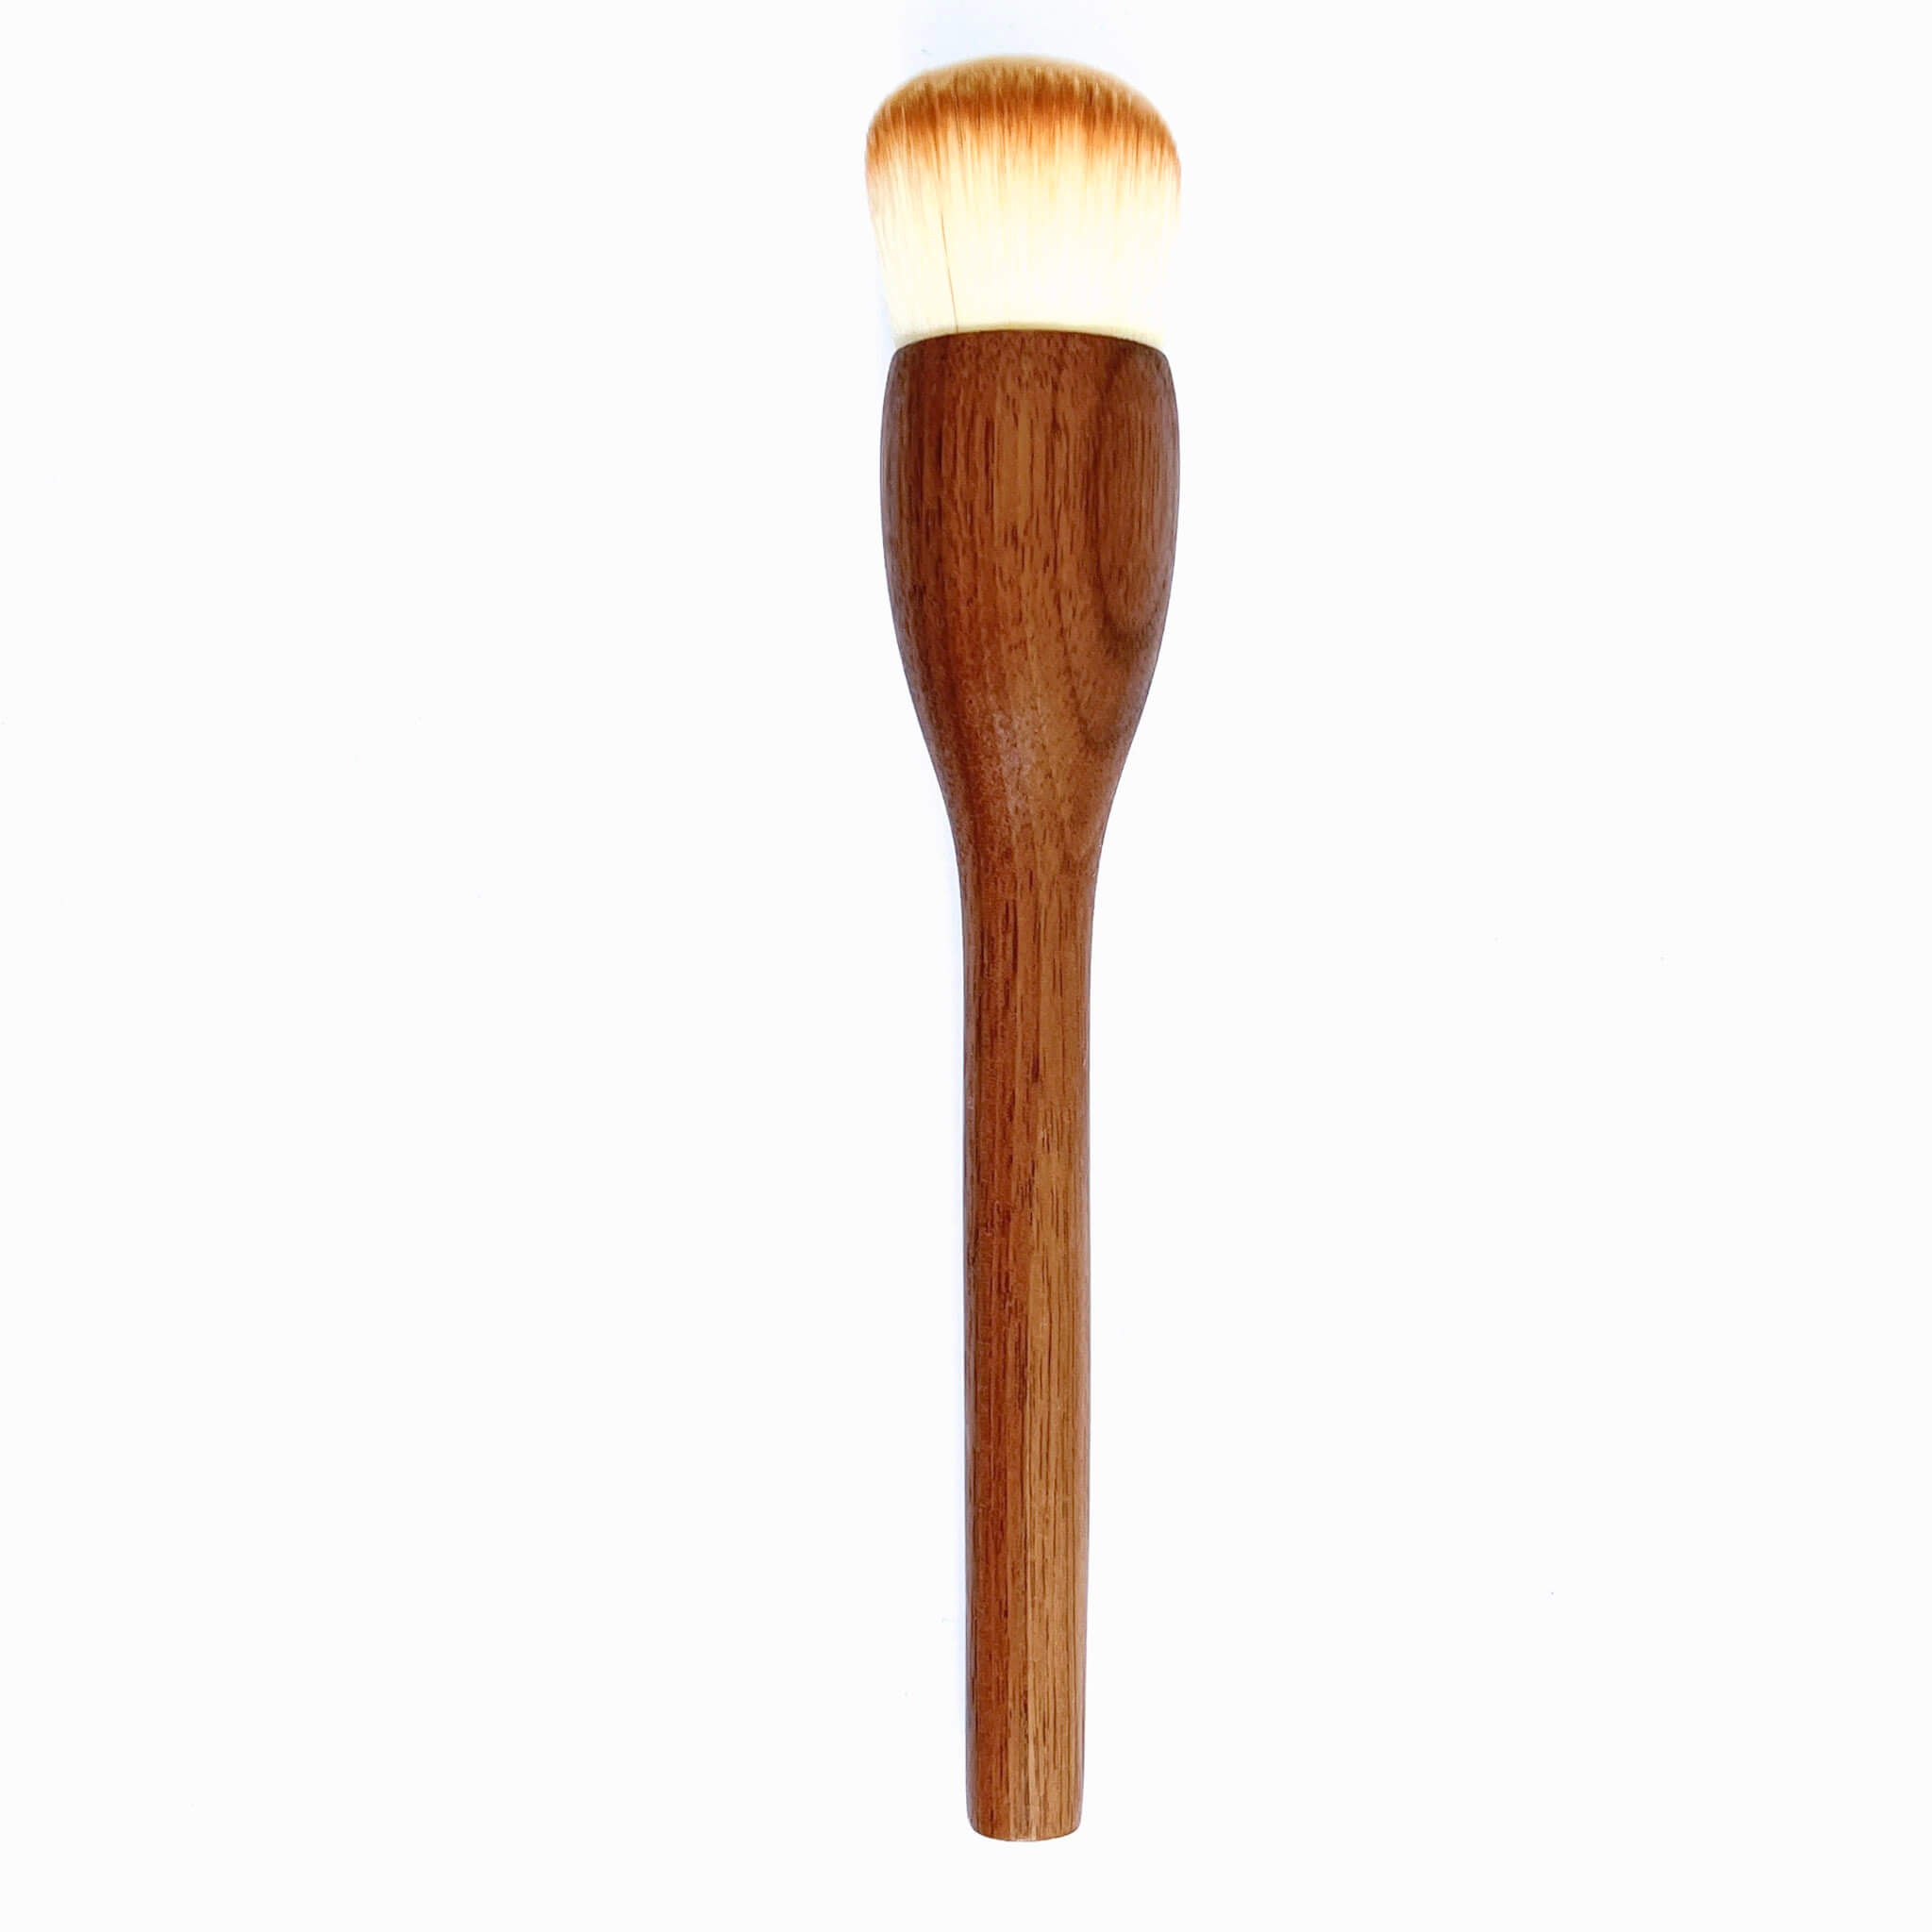 Foundation brush wooden round handle with white bristles